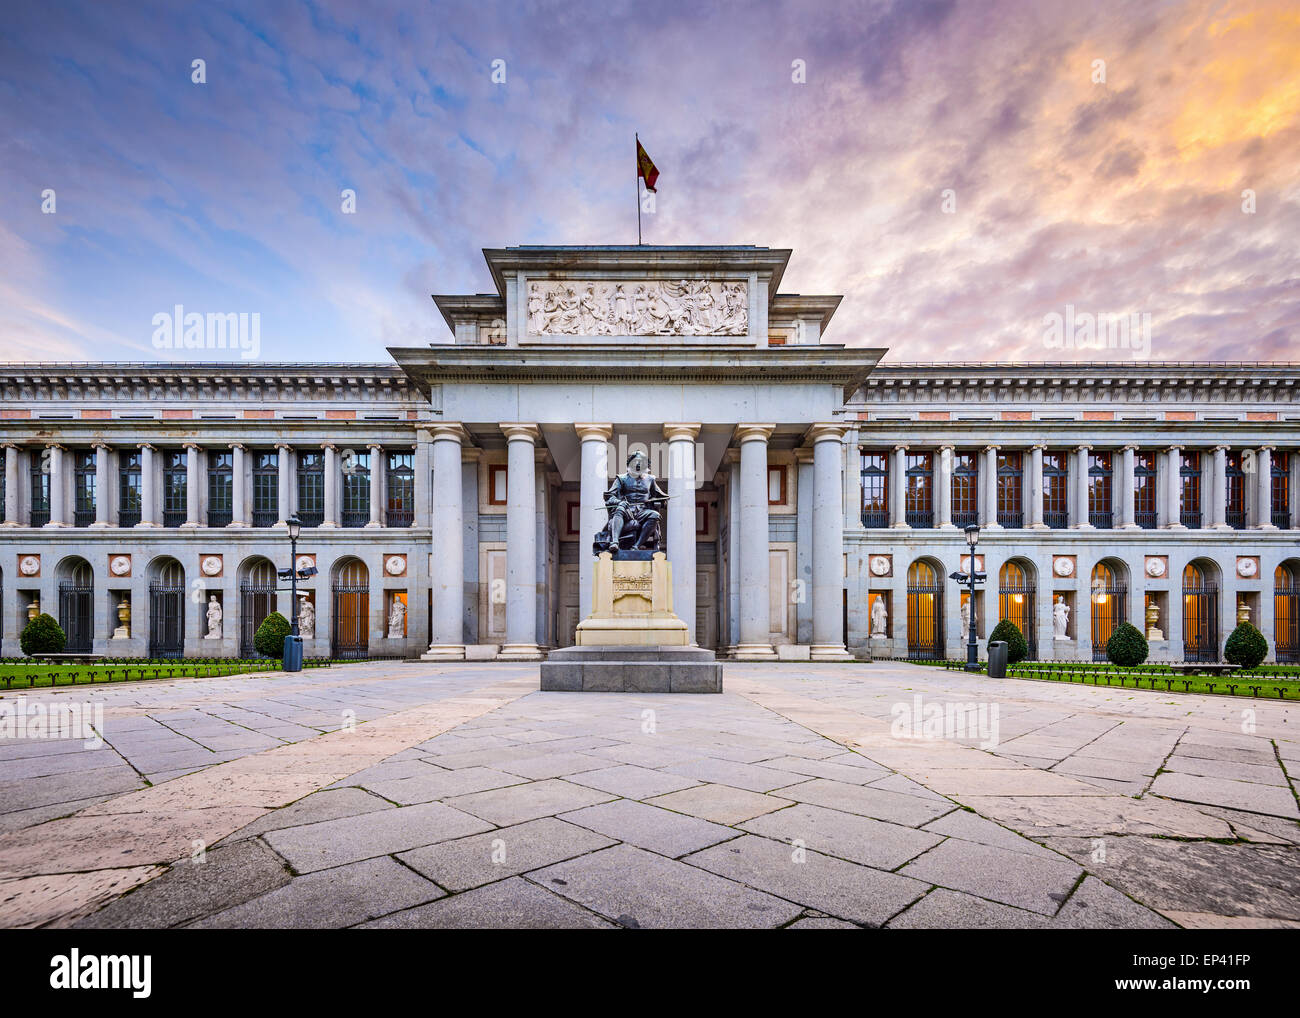 Die Fassade des Museo del Prado in Madrid, Spanien. Stockfoto